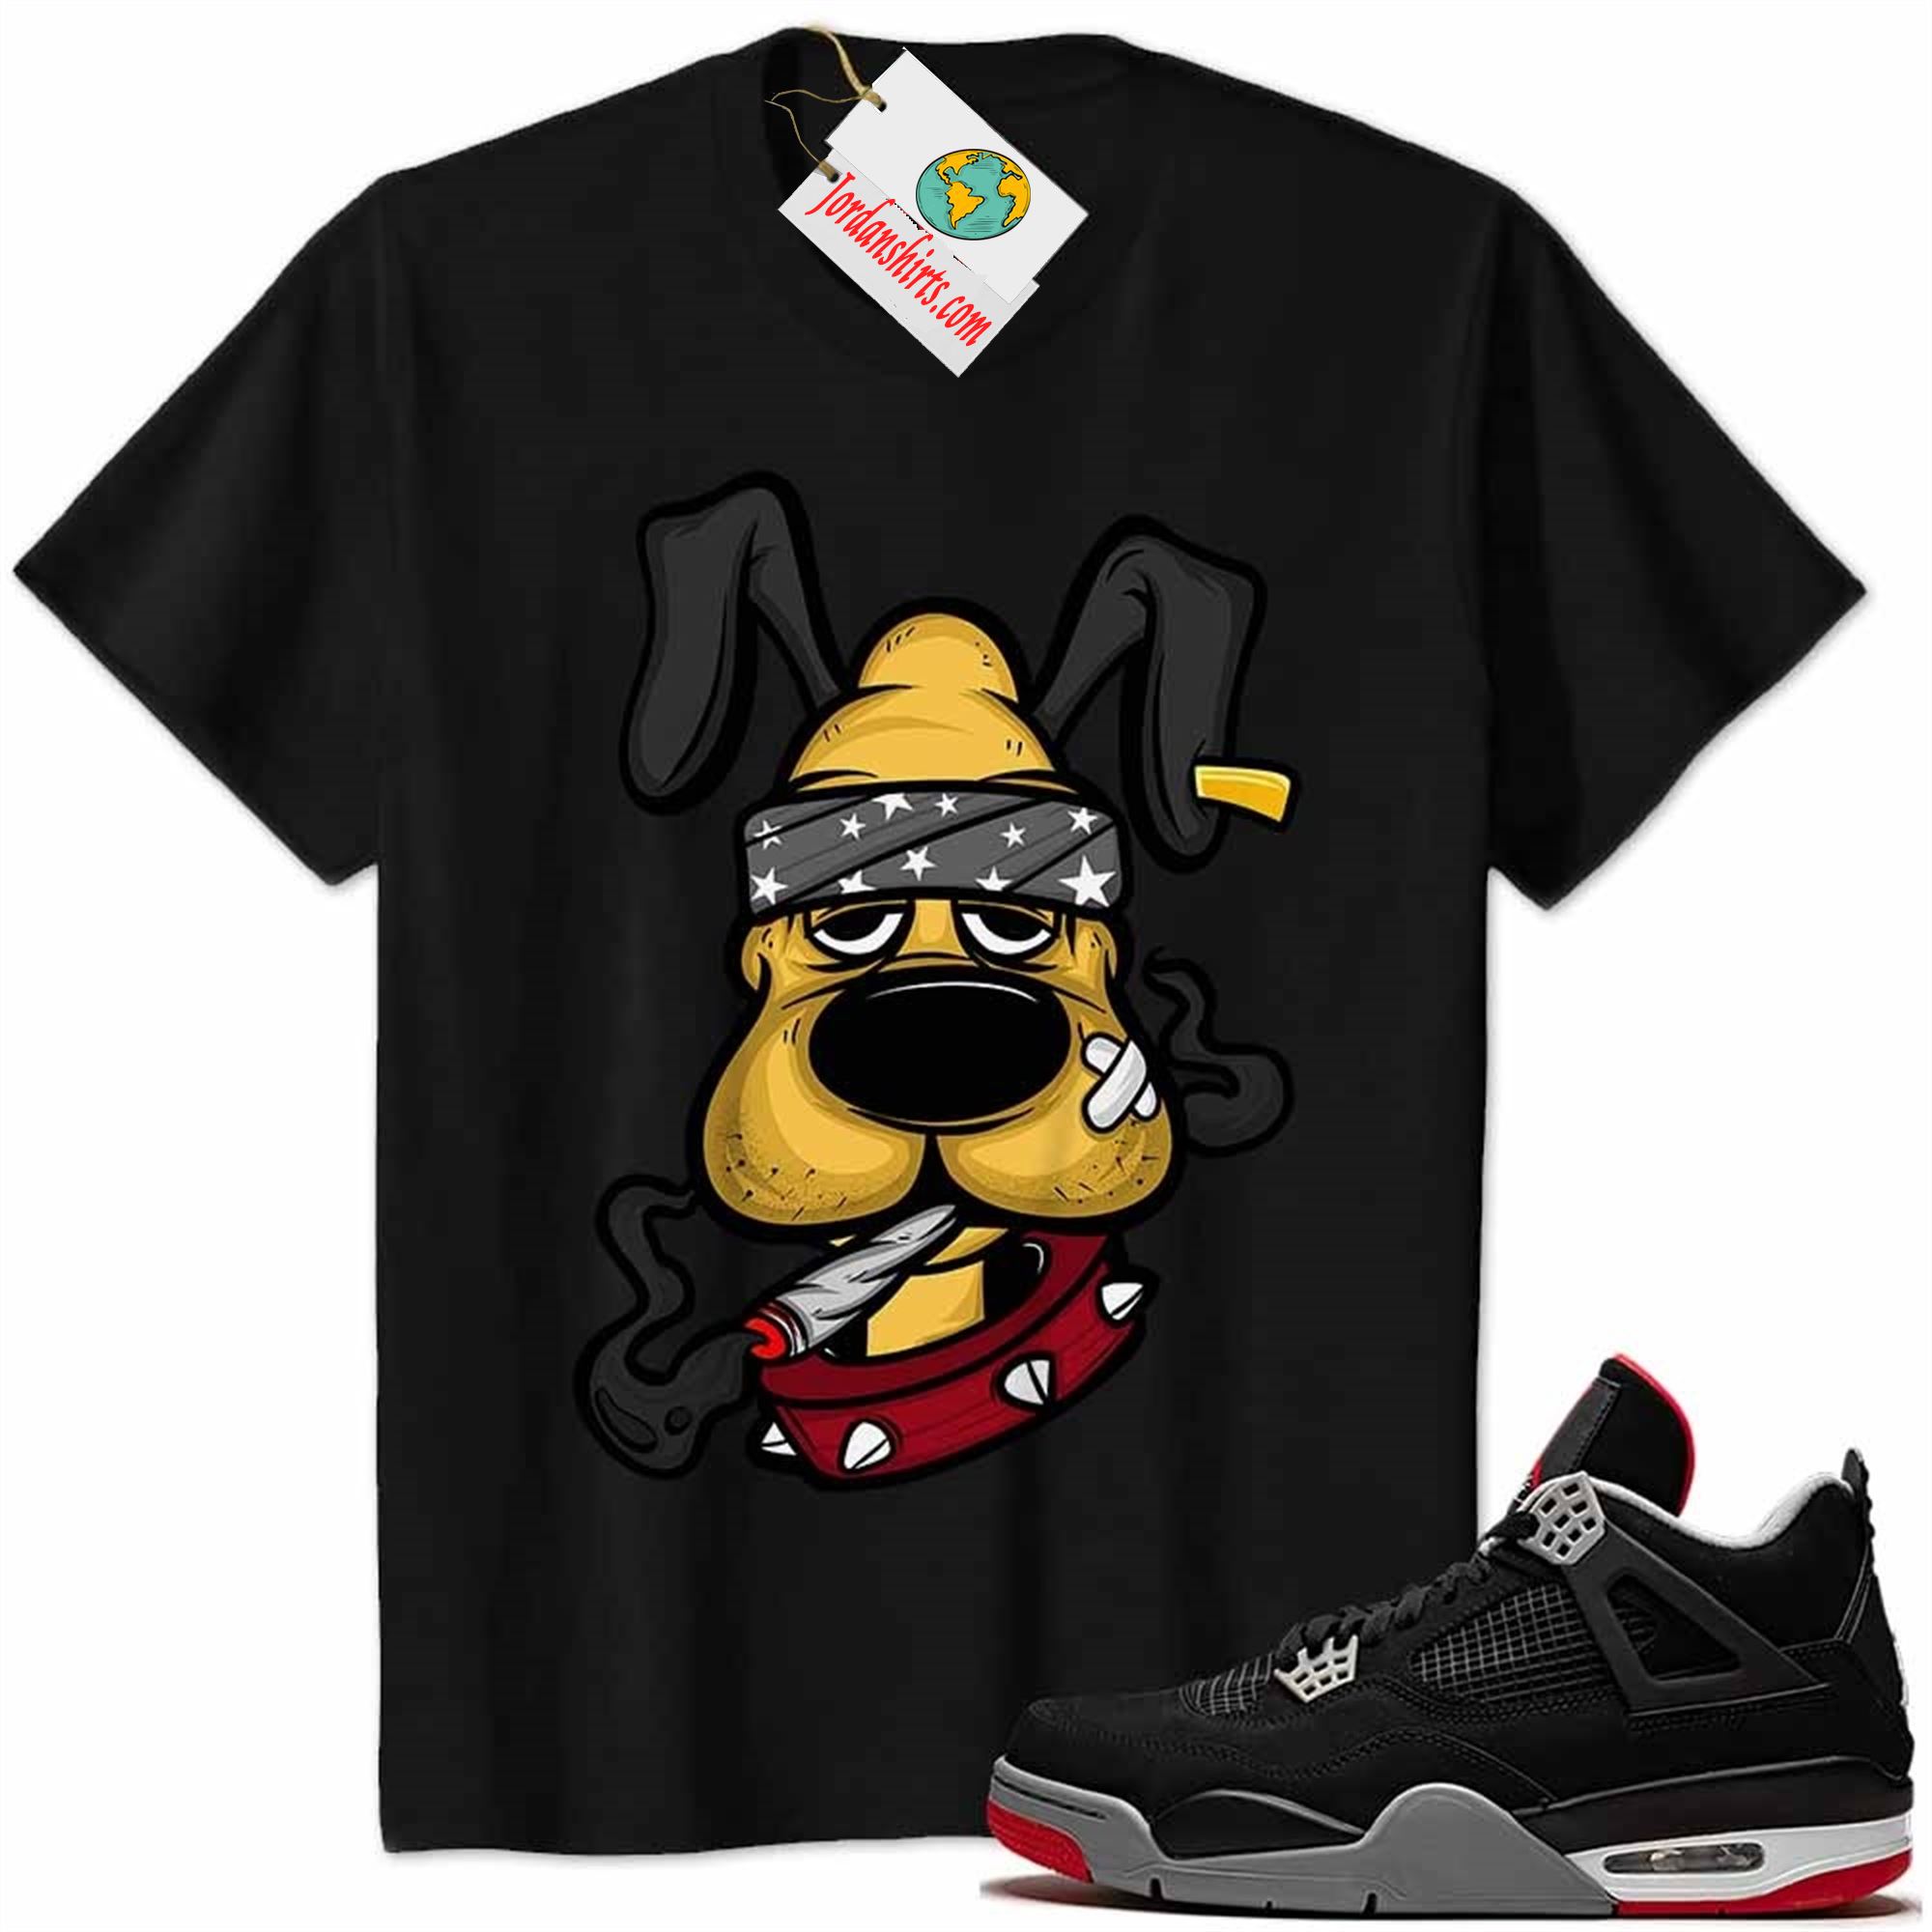 Jordan 4 Shirt, Gangster Pluto Smoke Weed Black Air Jordan 4 Bred 4s Full Size Up To 5xl